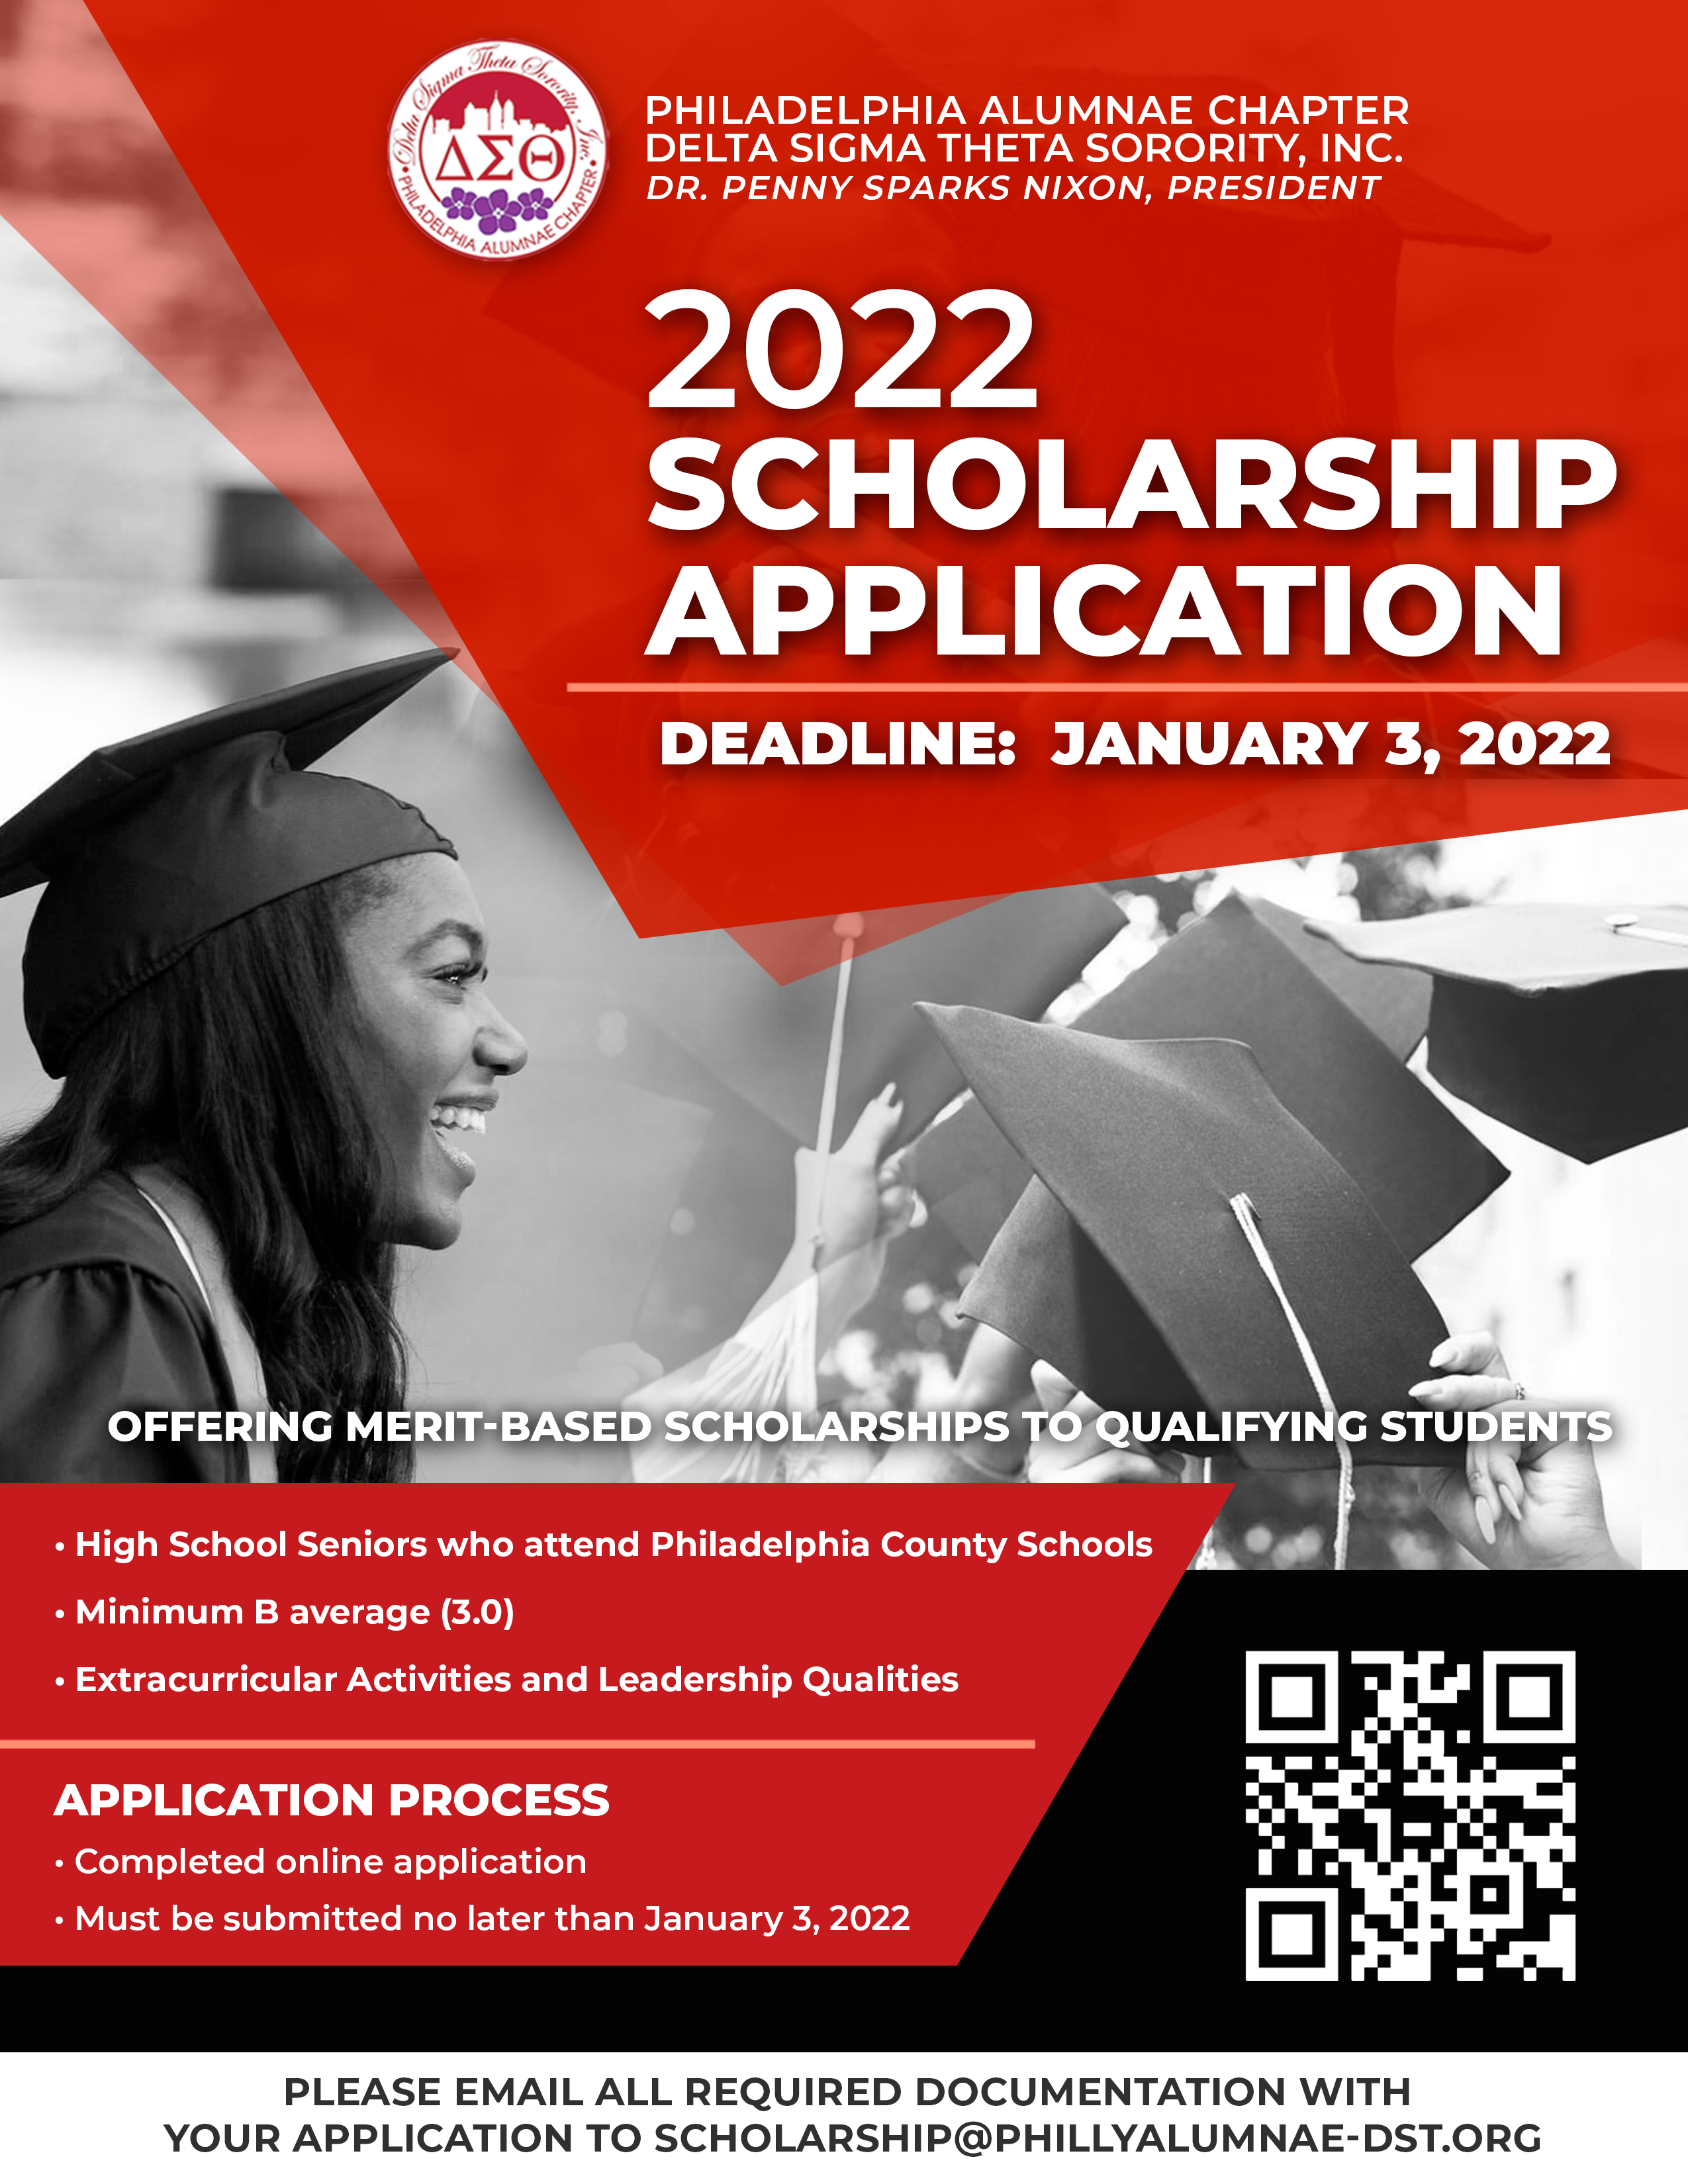 2022 Scholarship Application Deadline